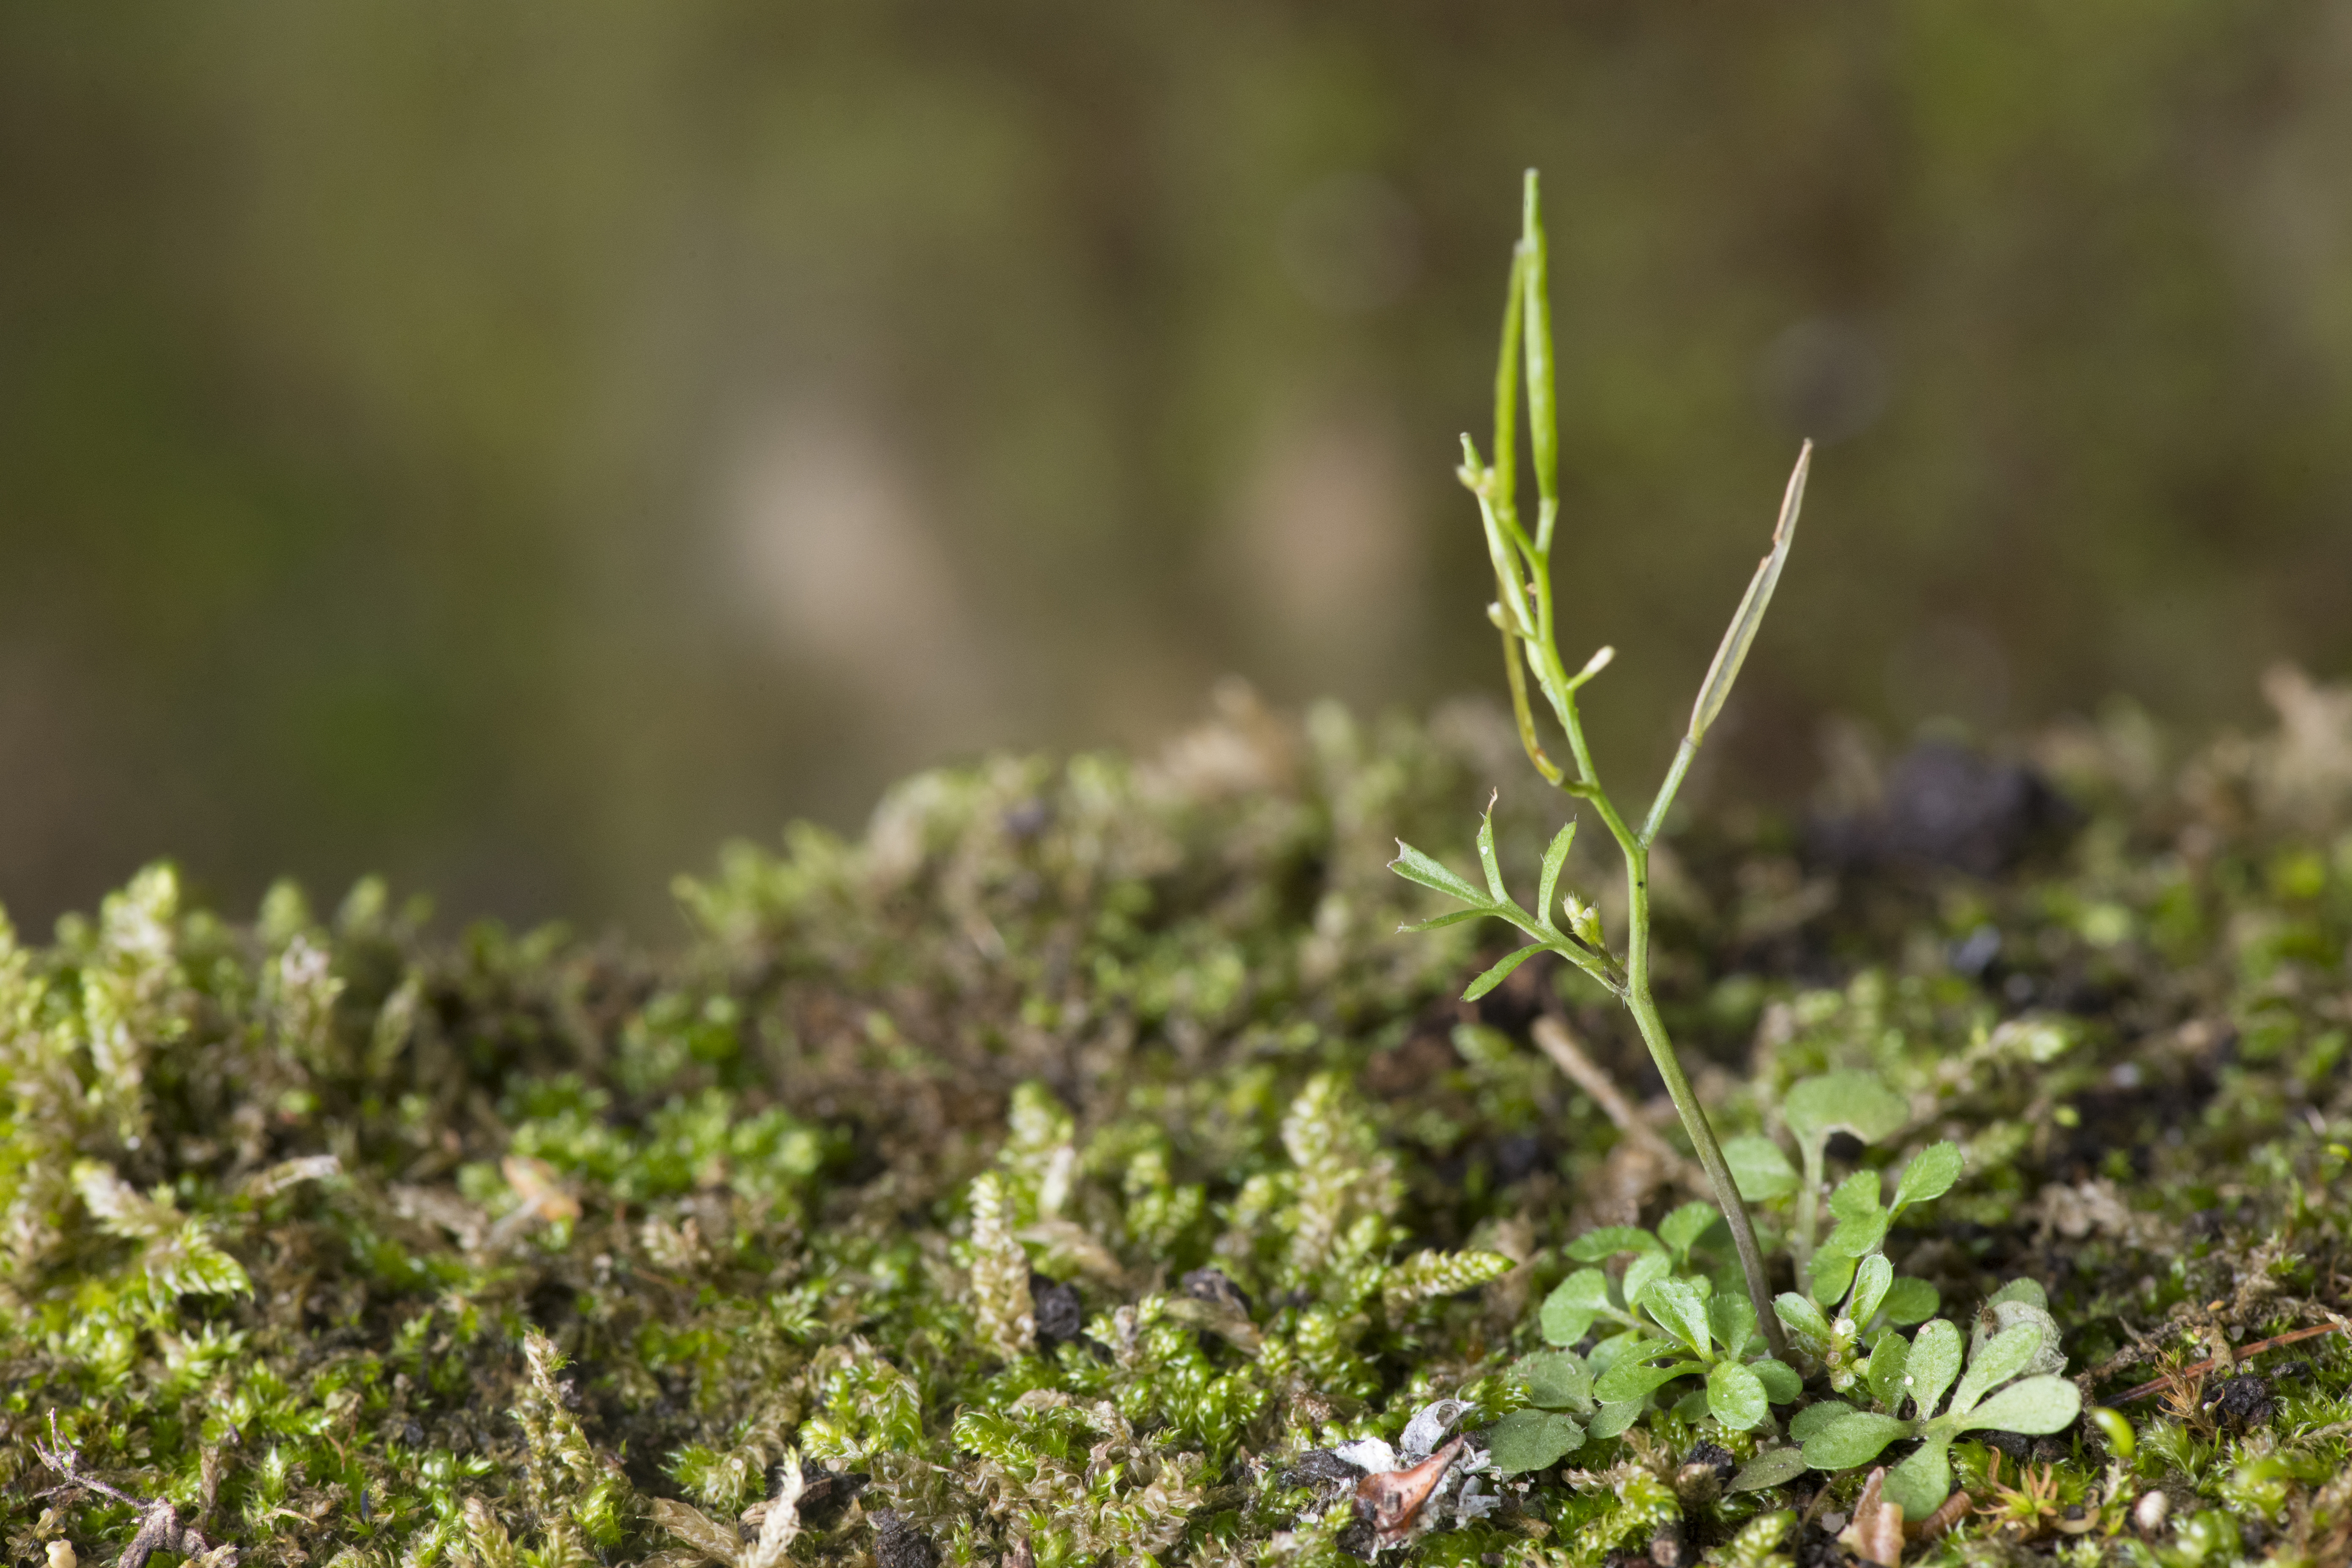 Small plant shoot growing among moss